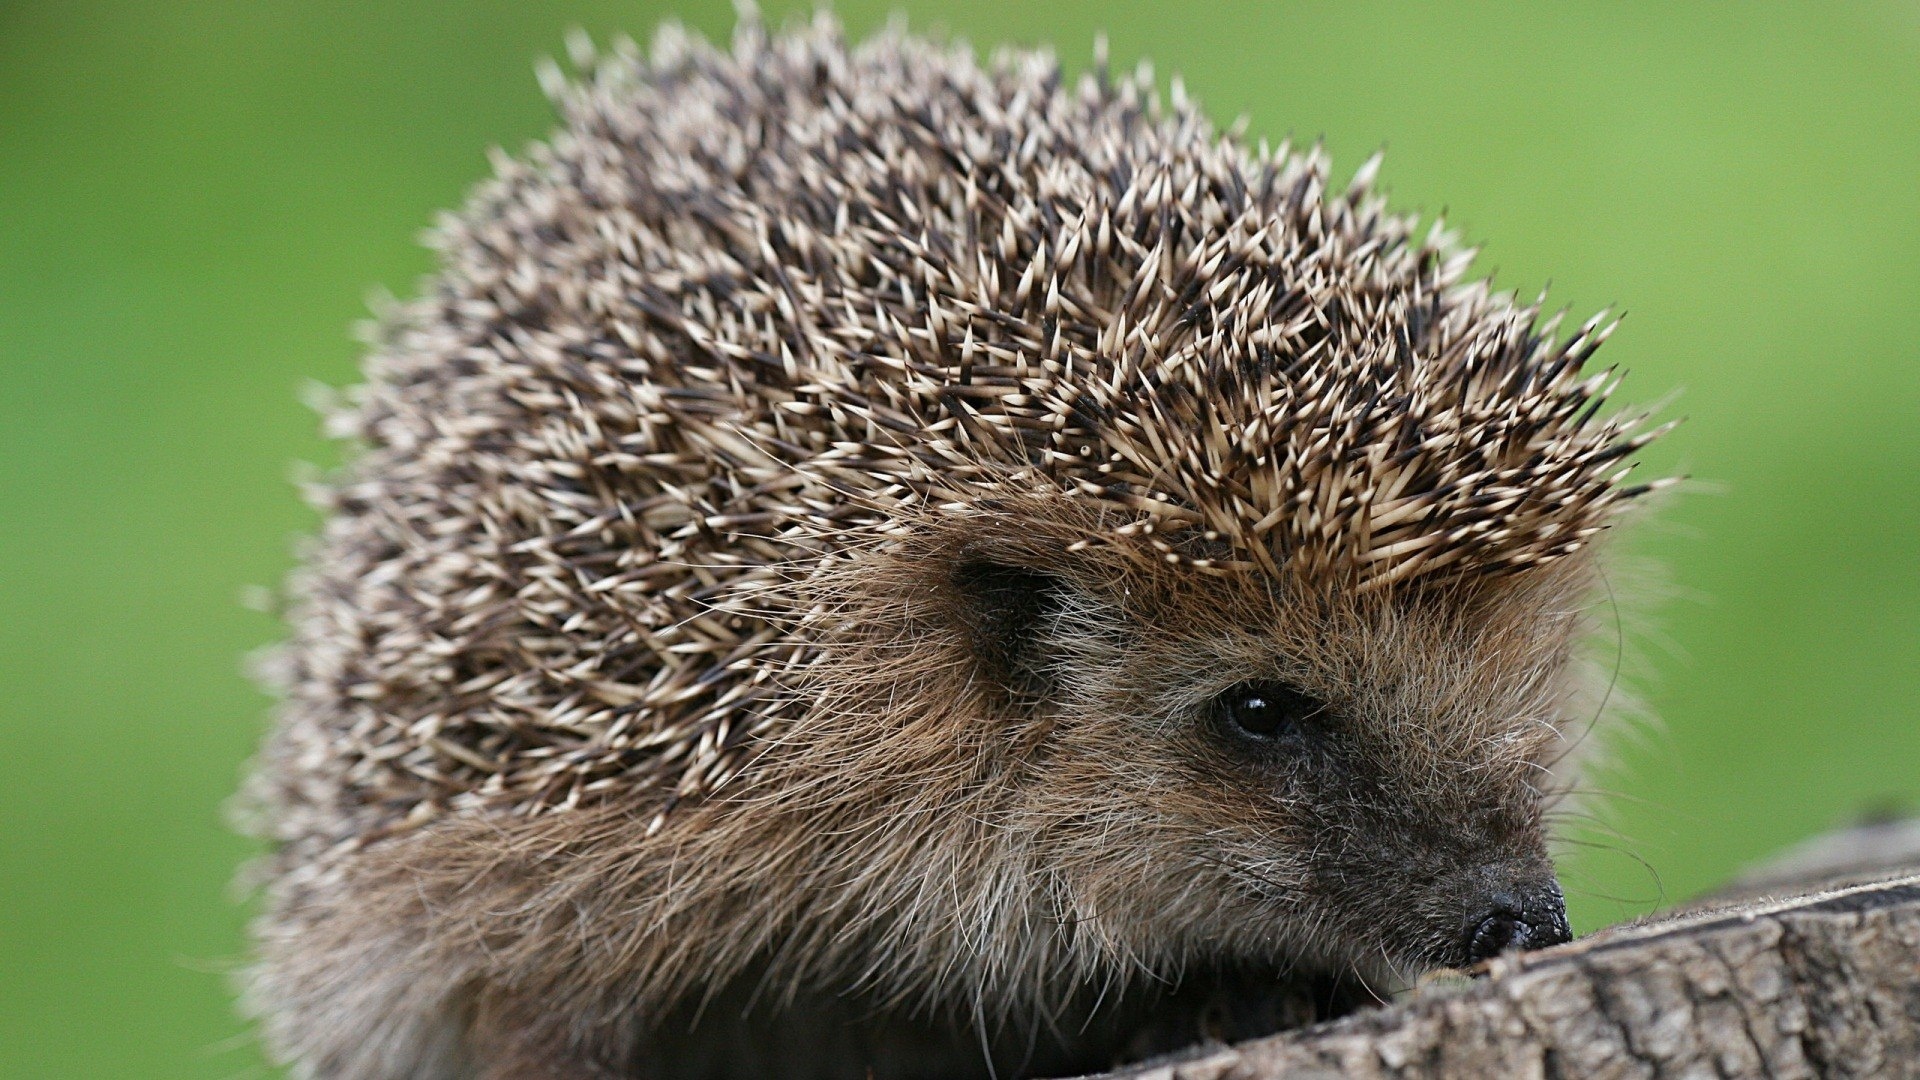 Hedgehog wallpaper photo hd